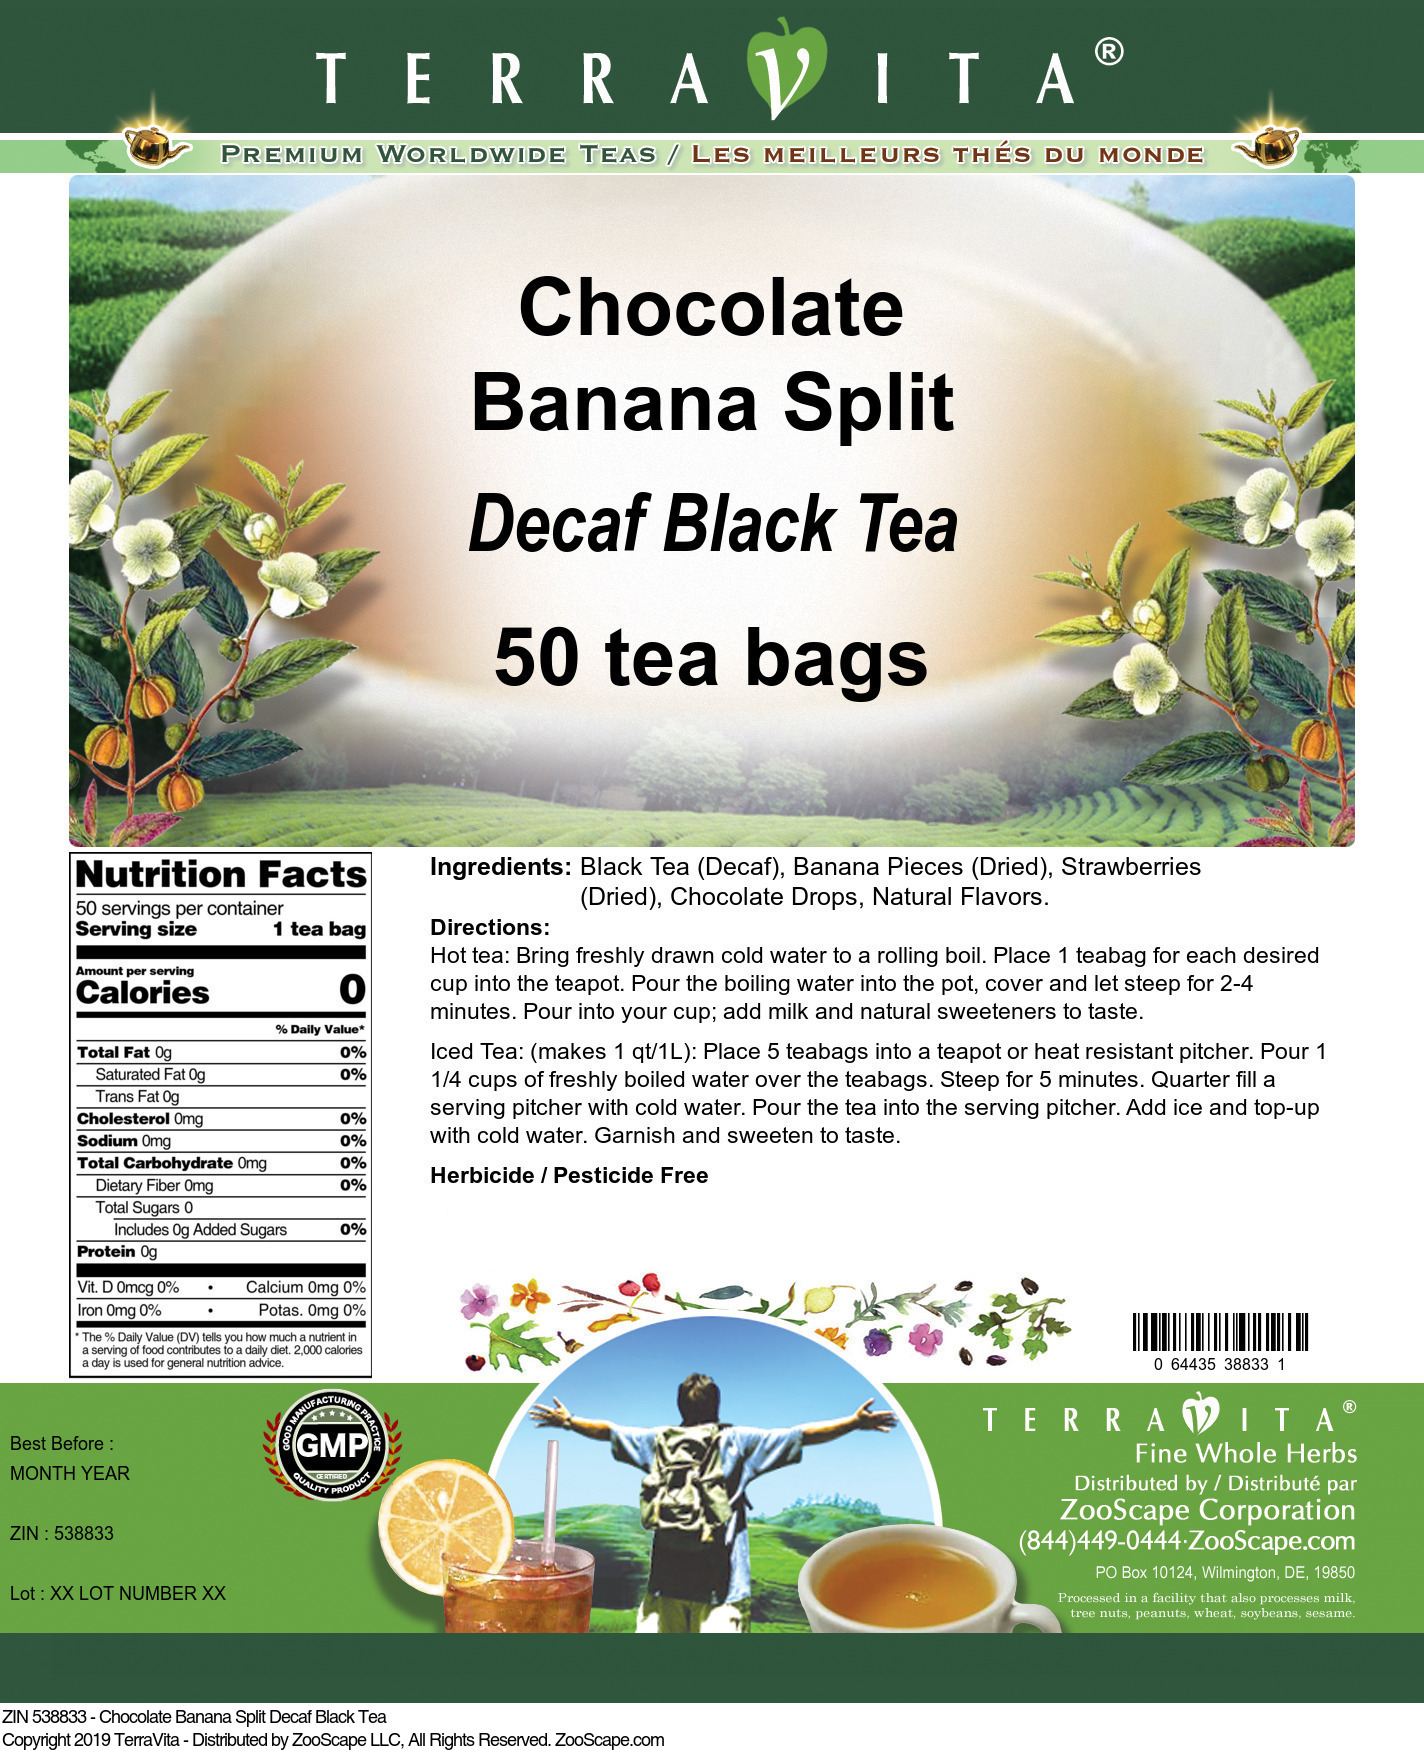 Chocolate Banana Split Decaf Black Tea - Label